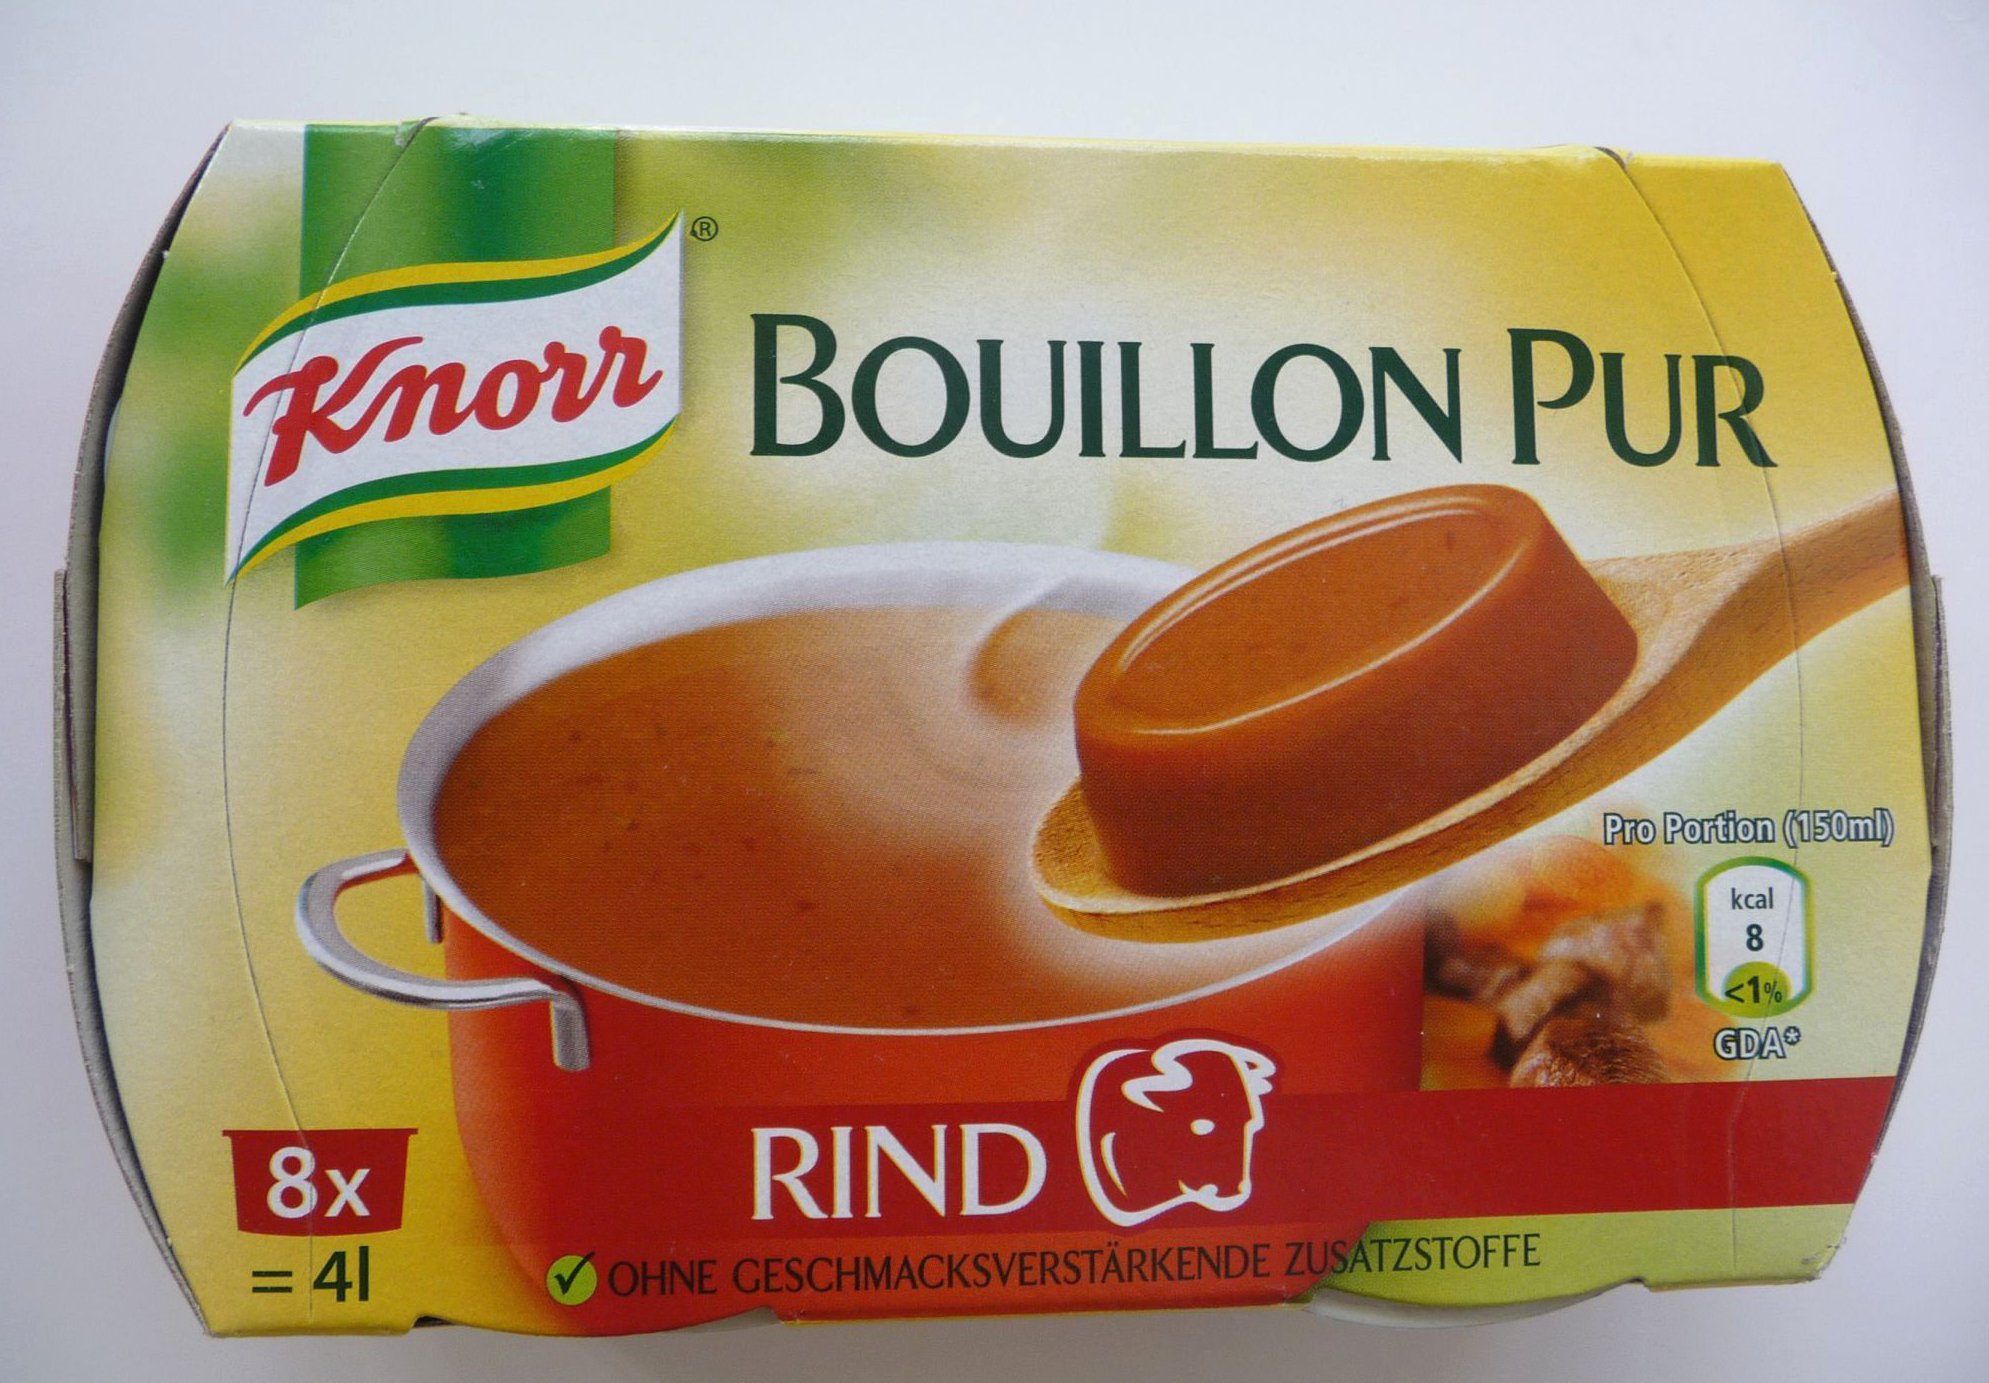 Knorr Bouillon Pur Rind | Lebensmittelklarheit